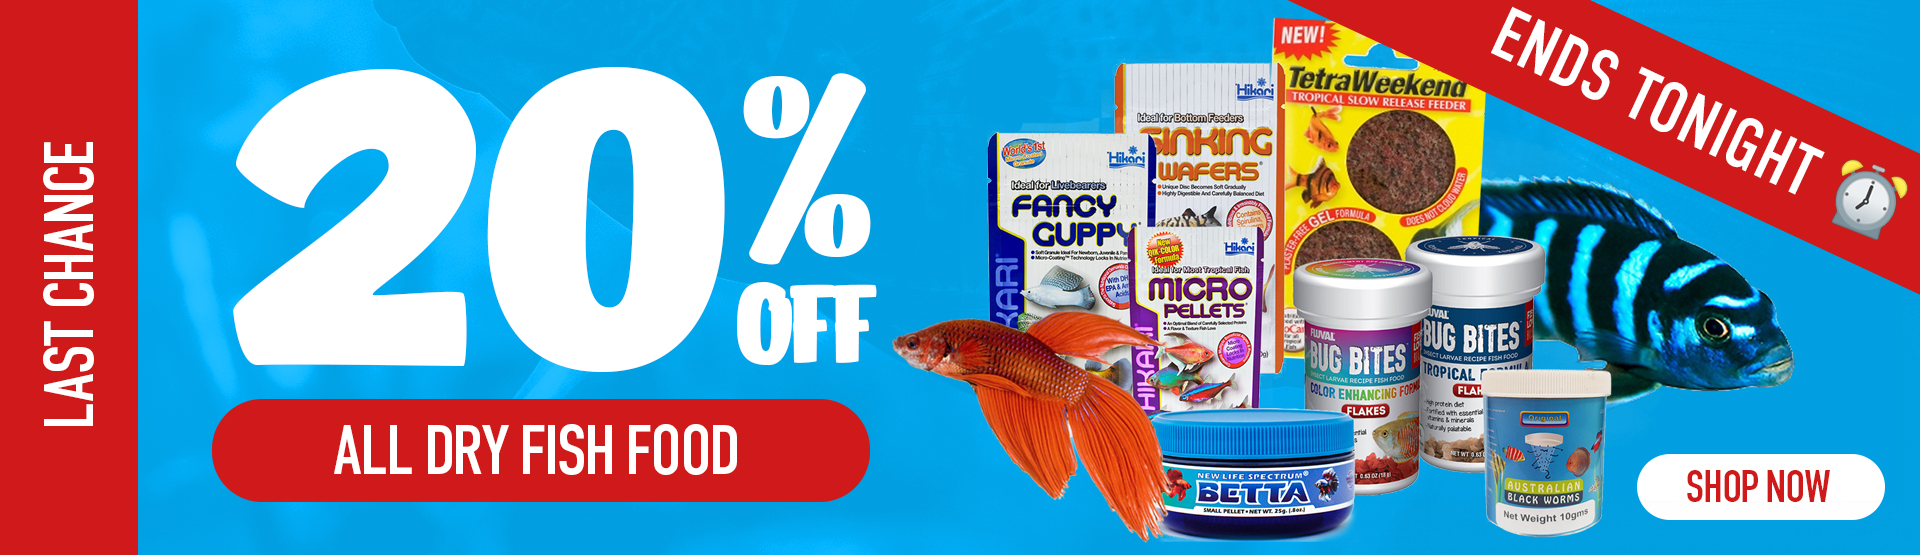 20% off fish food sale end tonight